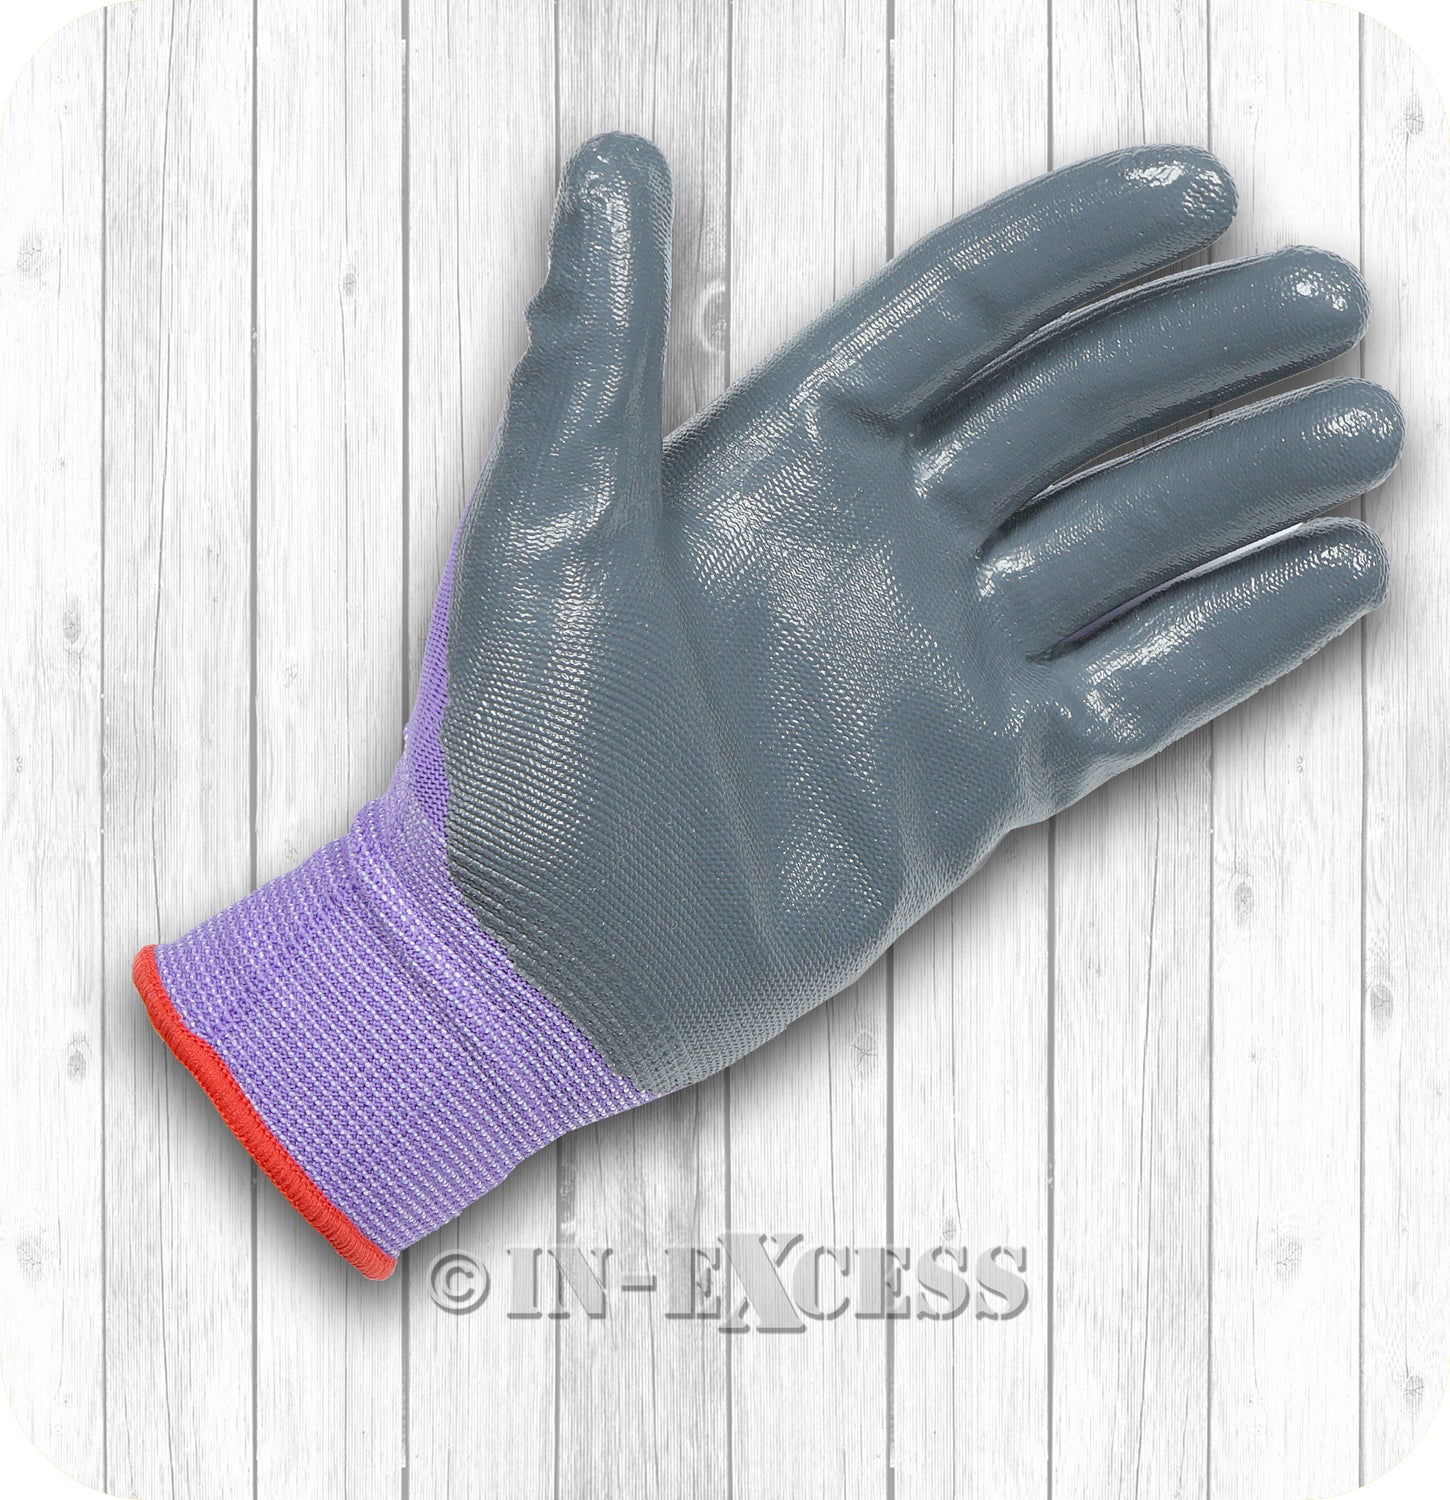 Marshall Second Skin Multi Purpose Stable Gardening Gloves - Purple